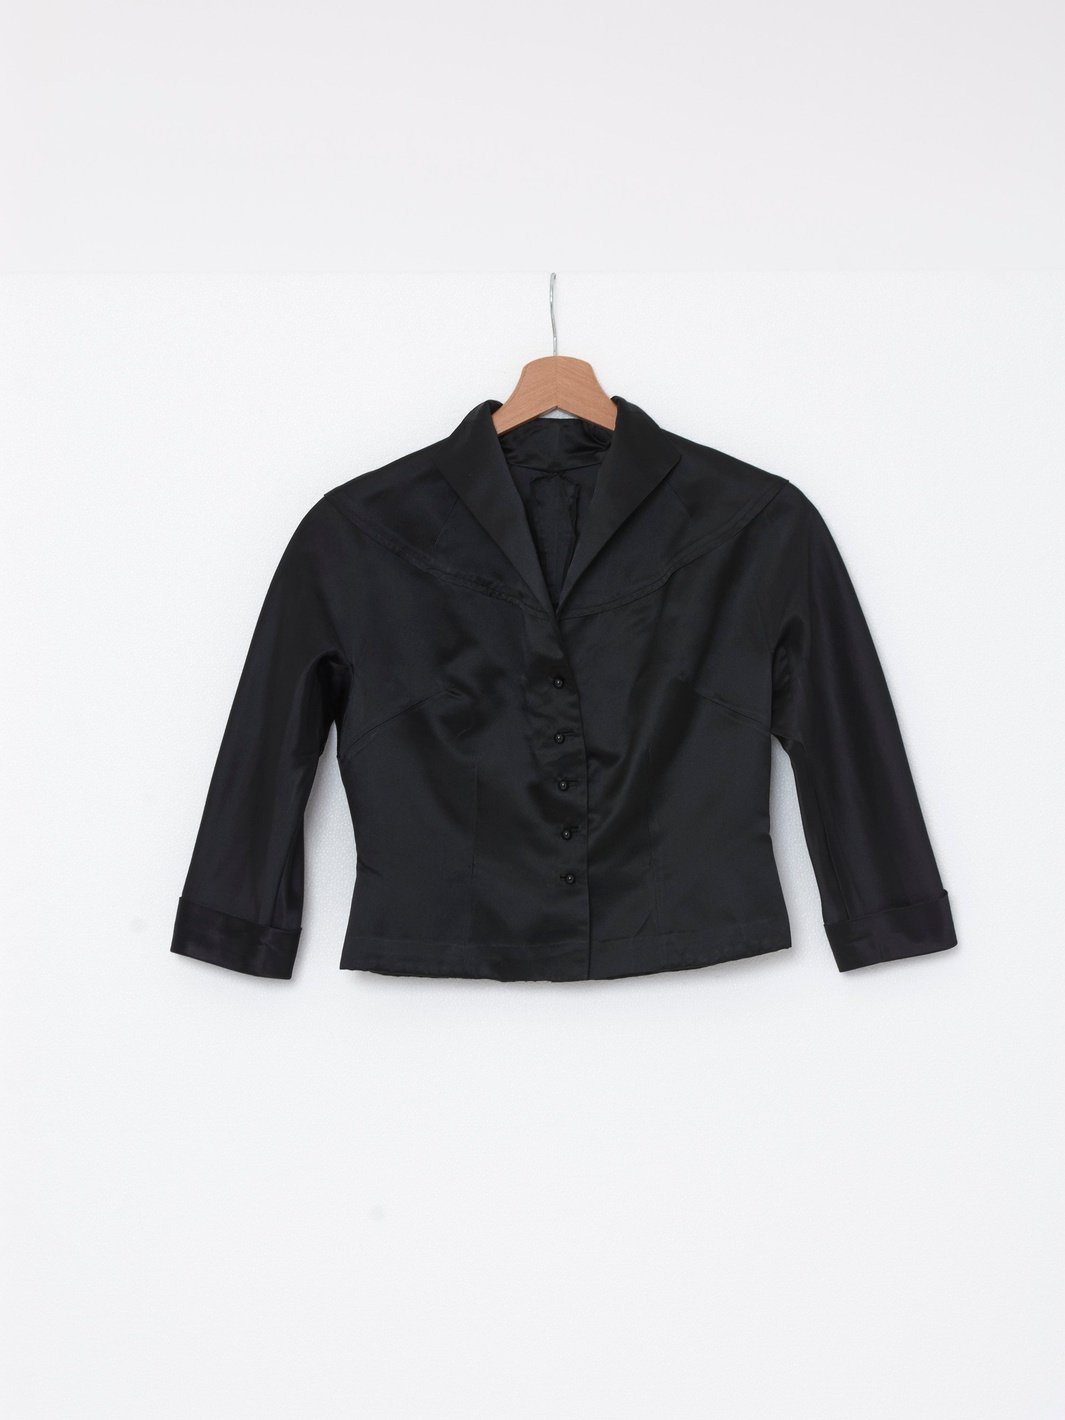 1980s black tailored silk suit